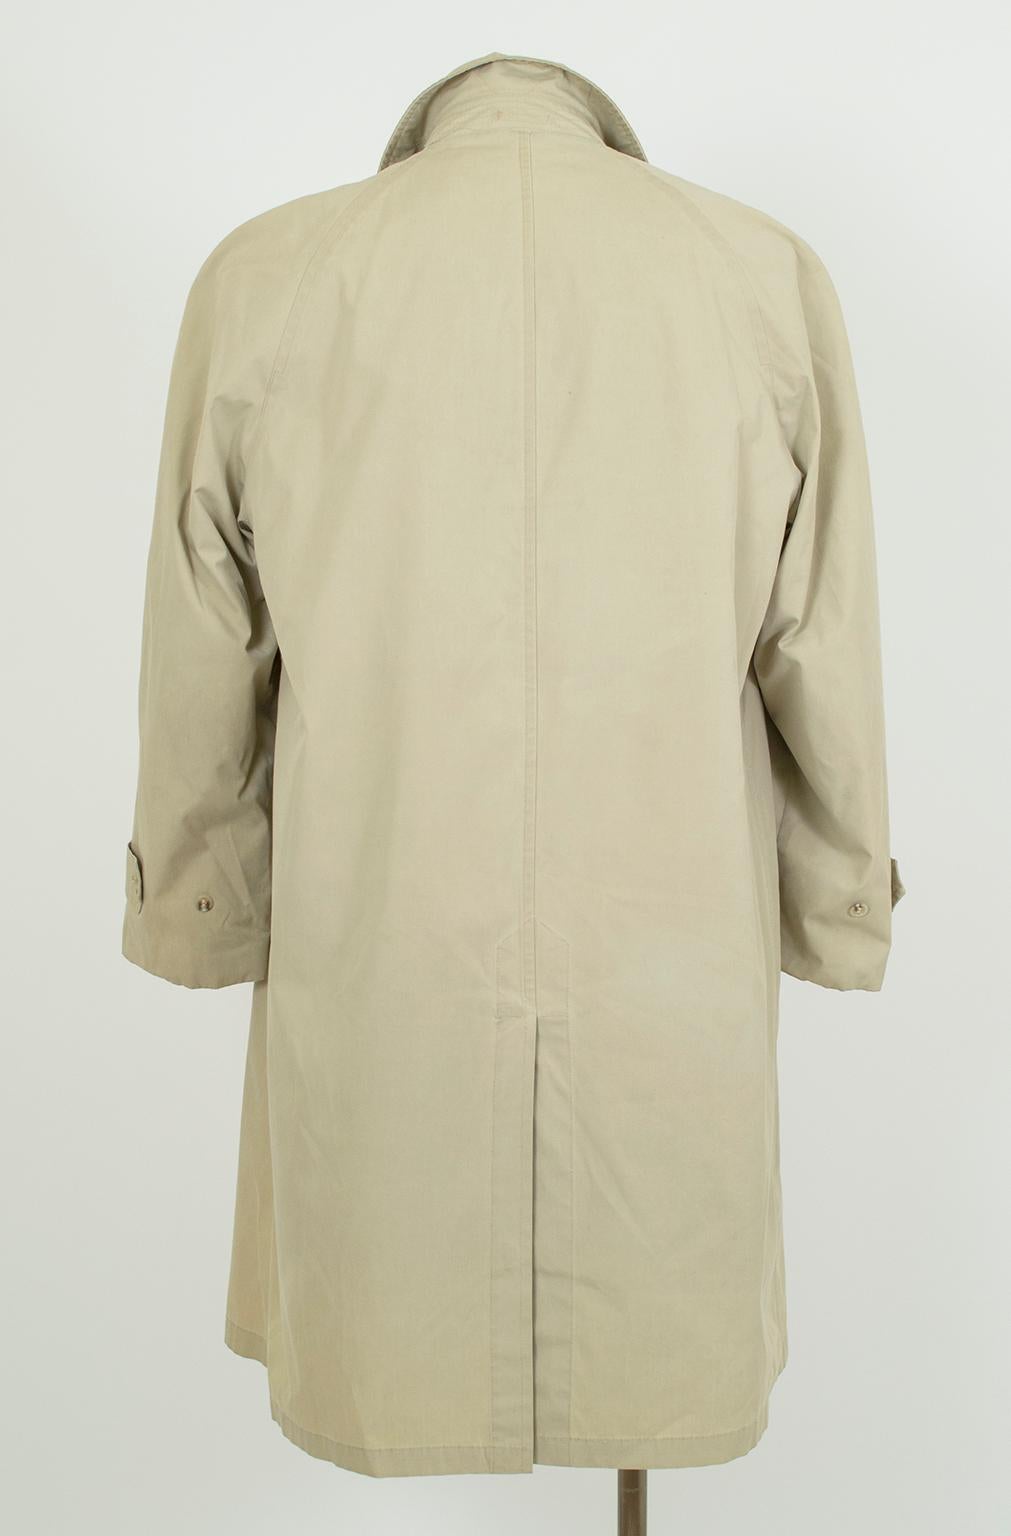 Men's Men’s London Fog Khaki Trench Raincoat with Removable Alpaca Lining–40/42, 1950s